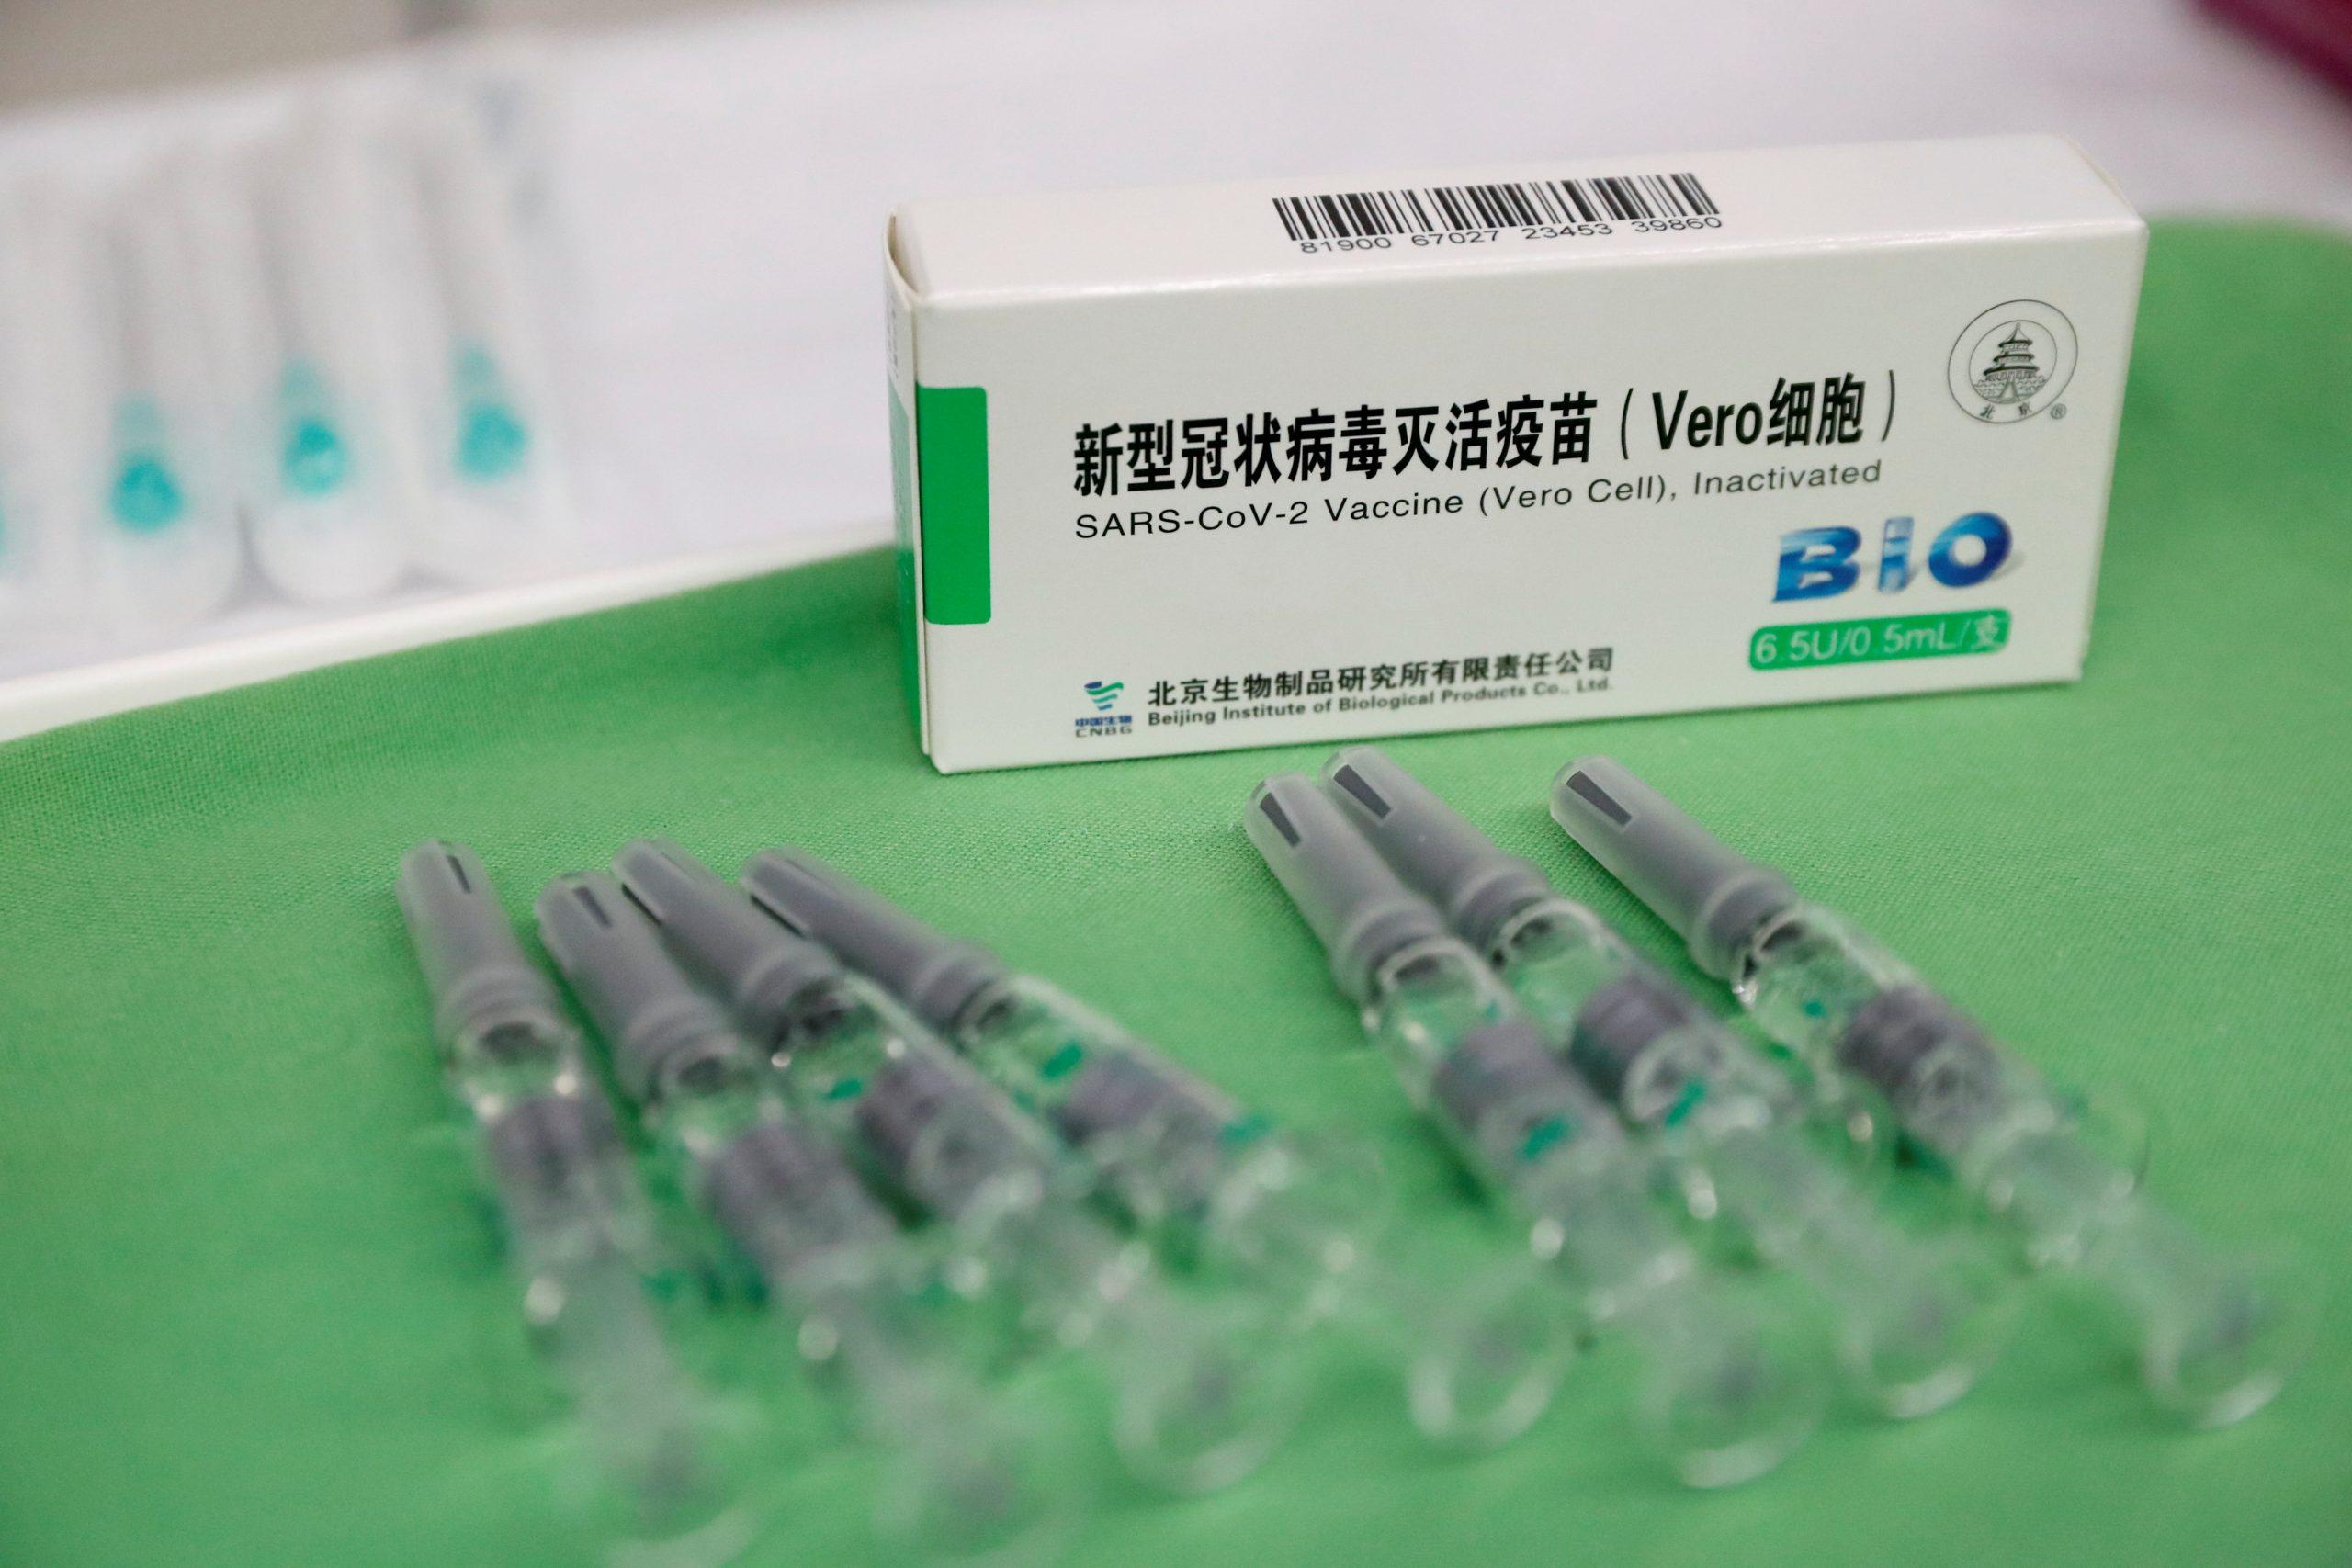 Stiže 500.000 Sinopharm vakcina - Avaz